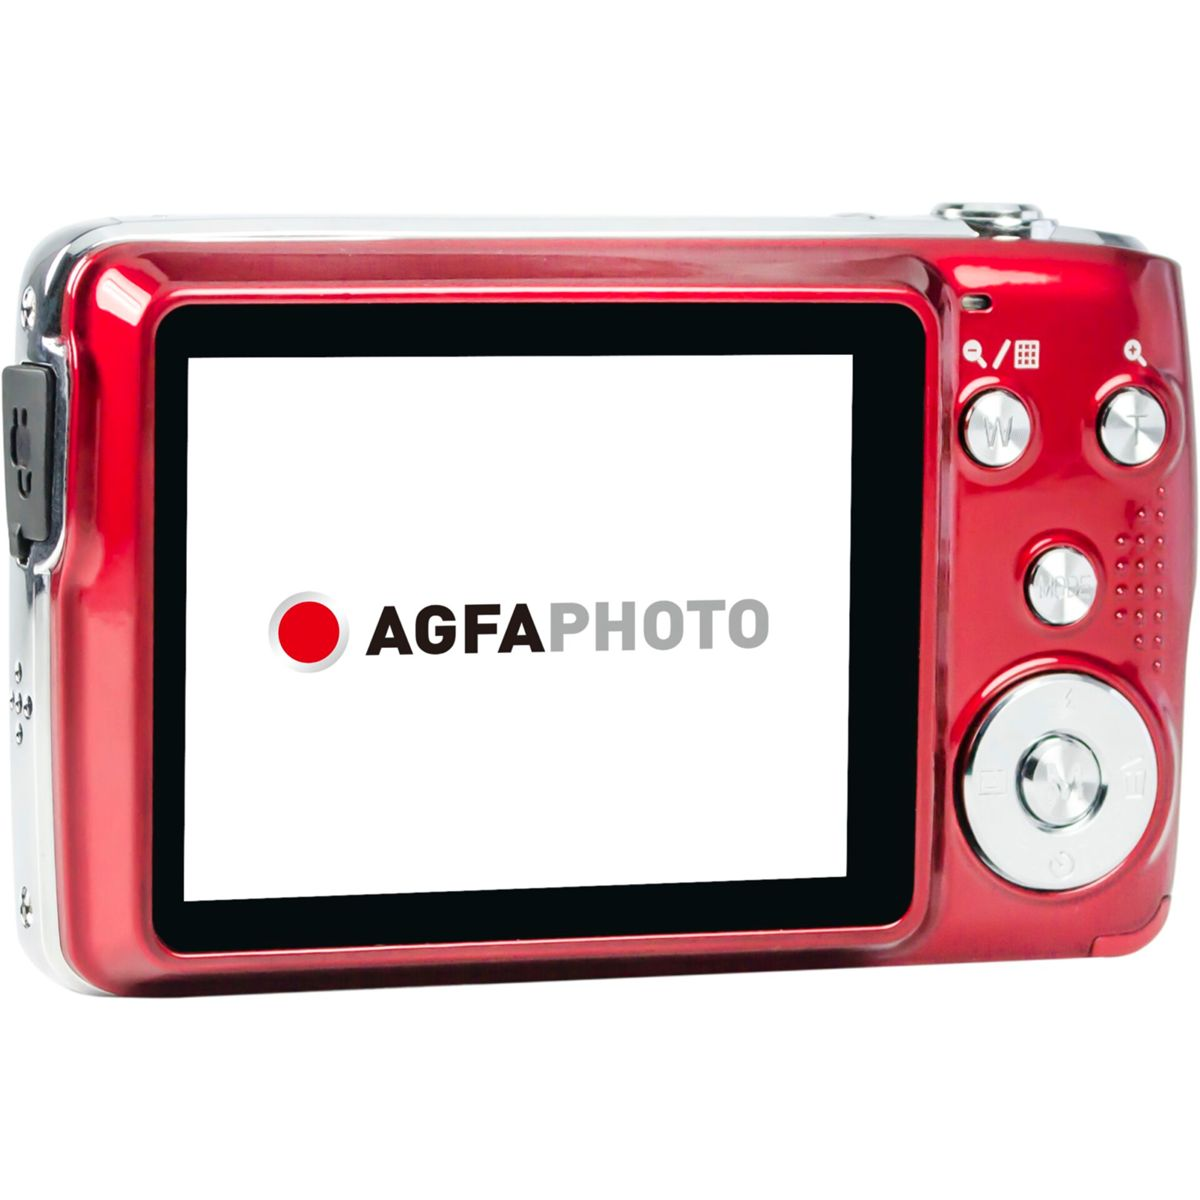 rot- Realishot AGFAPHOTO rot Digitalkamera DC8200